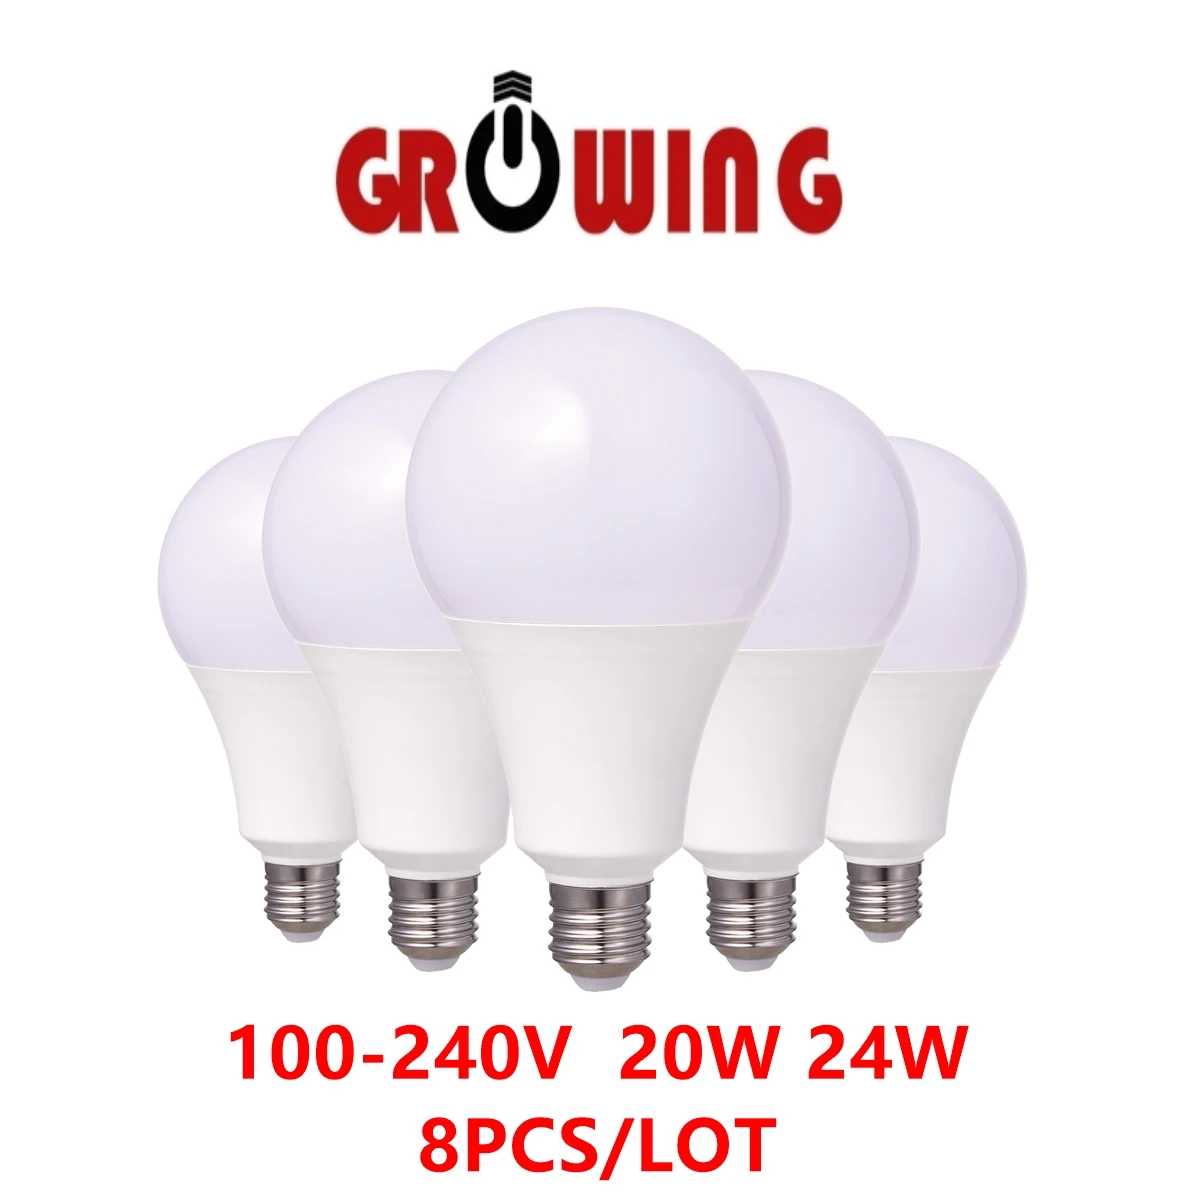 

8PCS/LOT LED high power bulb A80 100V-240V E27 B22 20W 24W 100LM/W for mall home lighting super bright warm white light